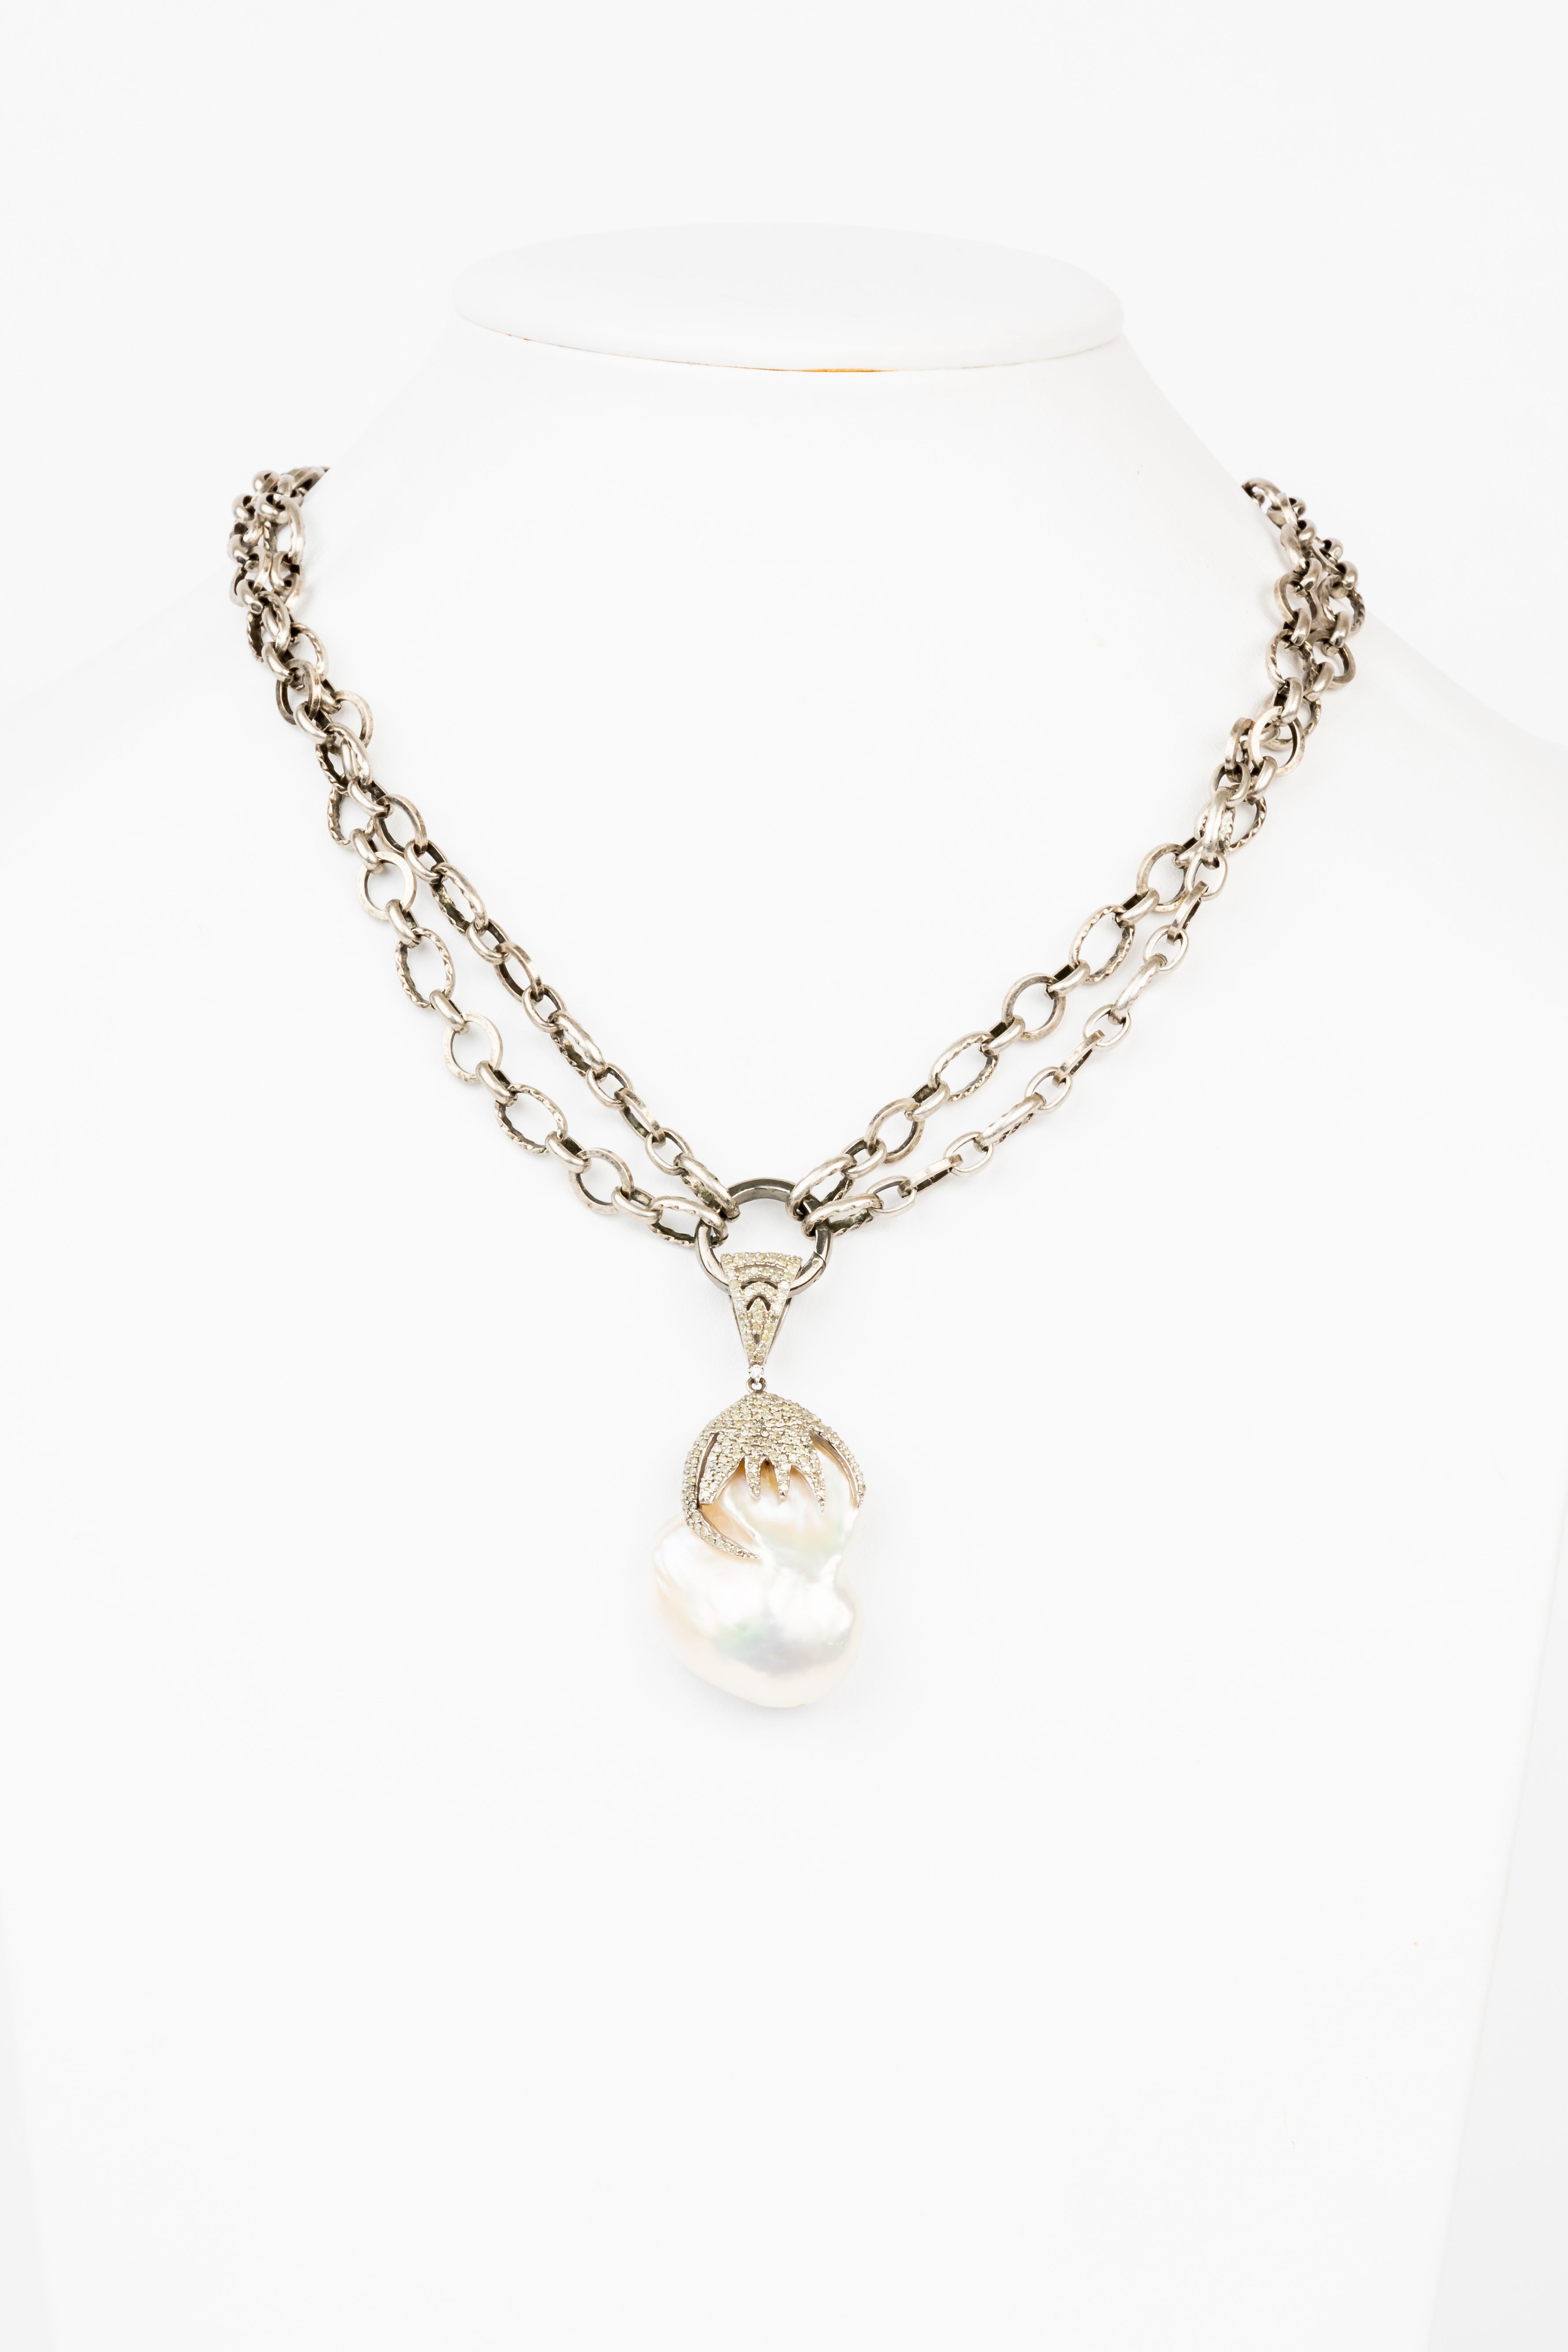 Pave Diamond, Baroque Pearl Necklace